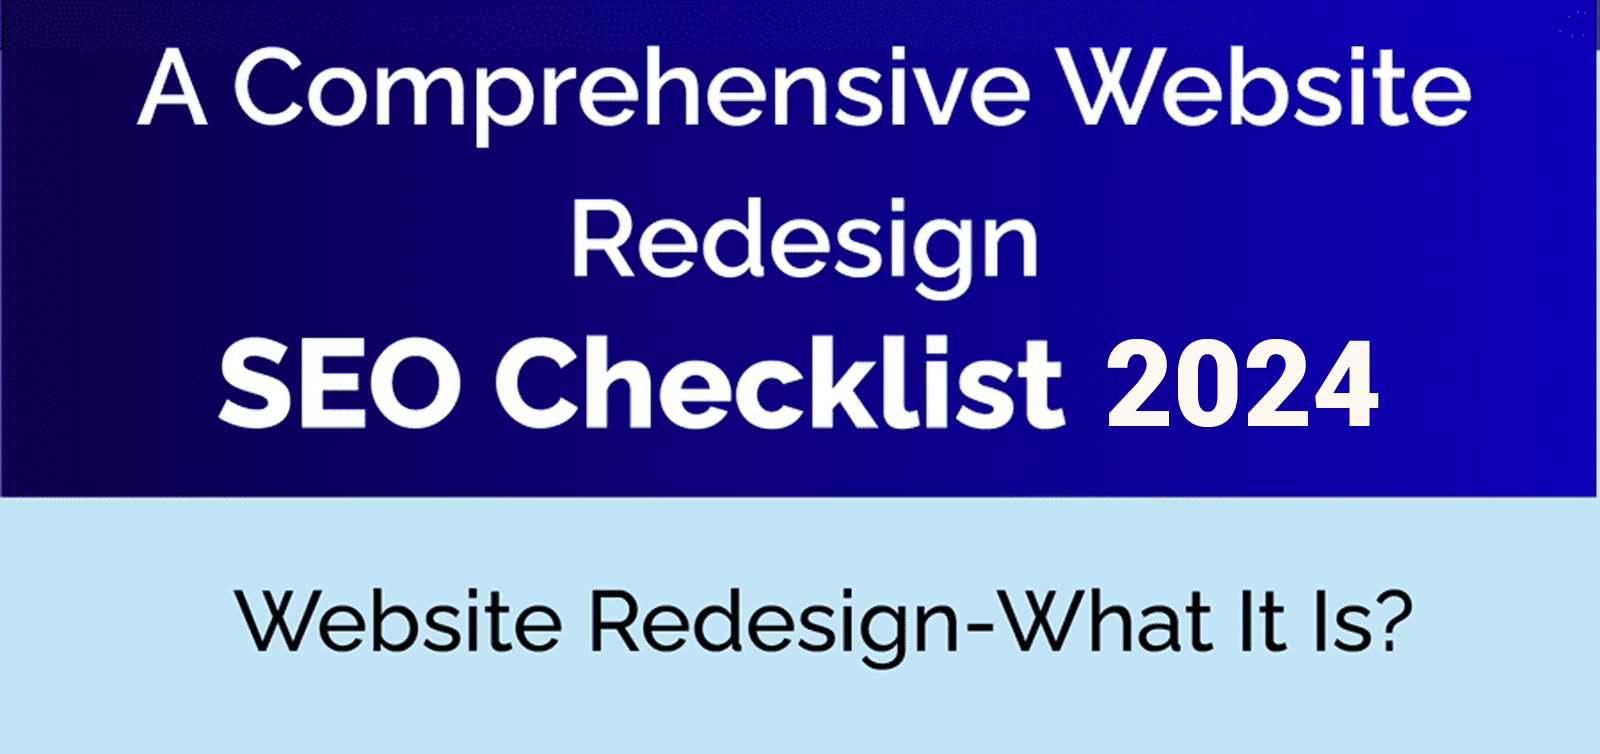 A Comprehensive Website Redesign SEO Checklist 2024